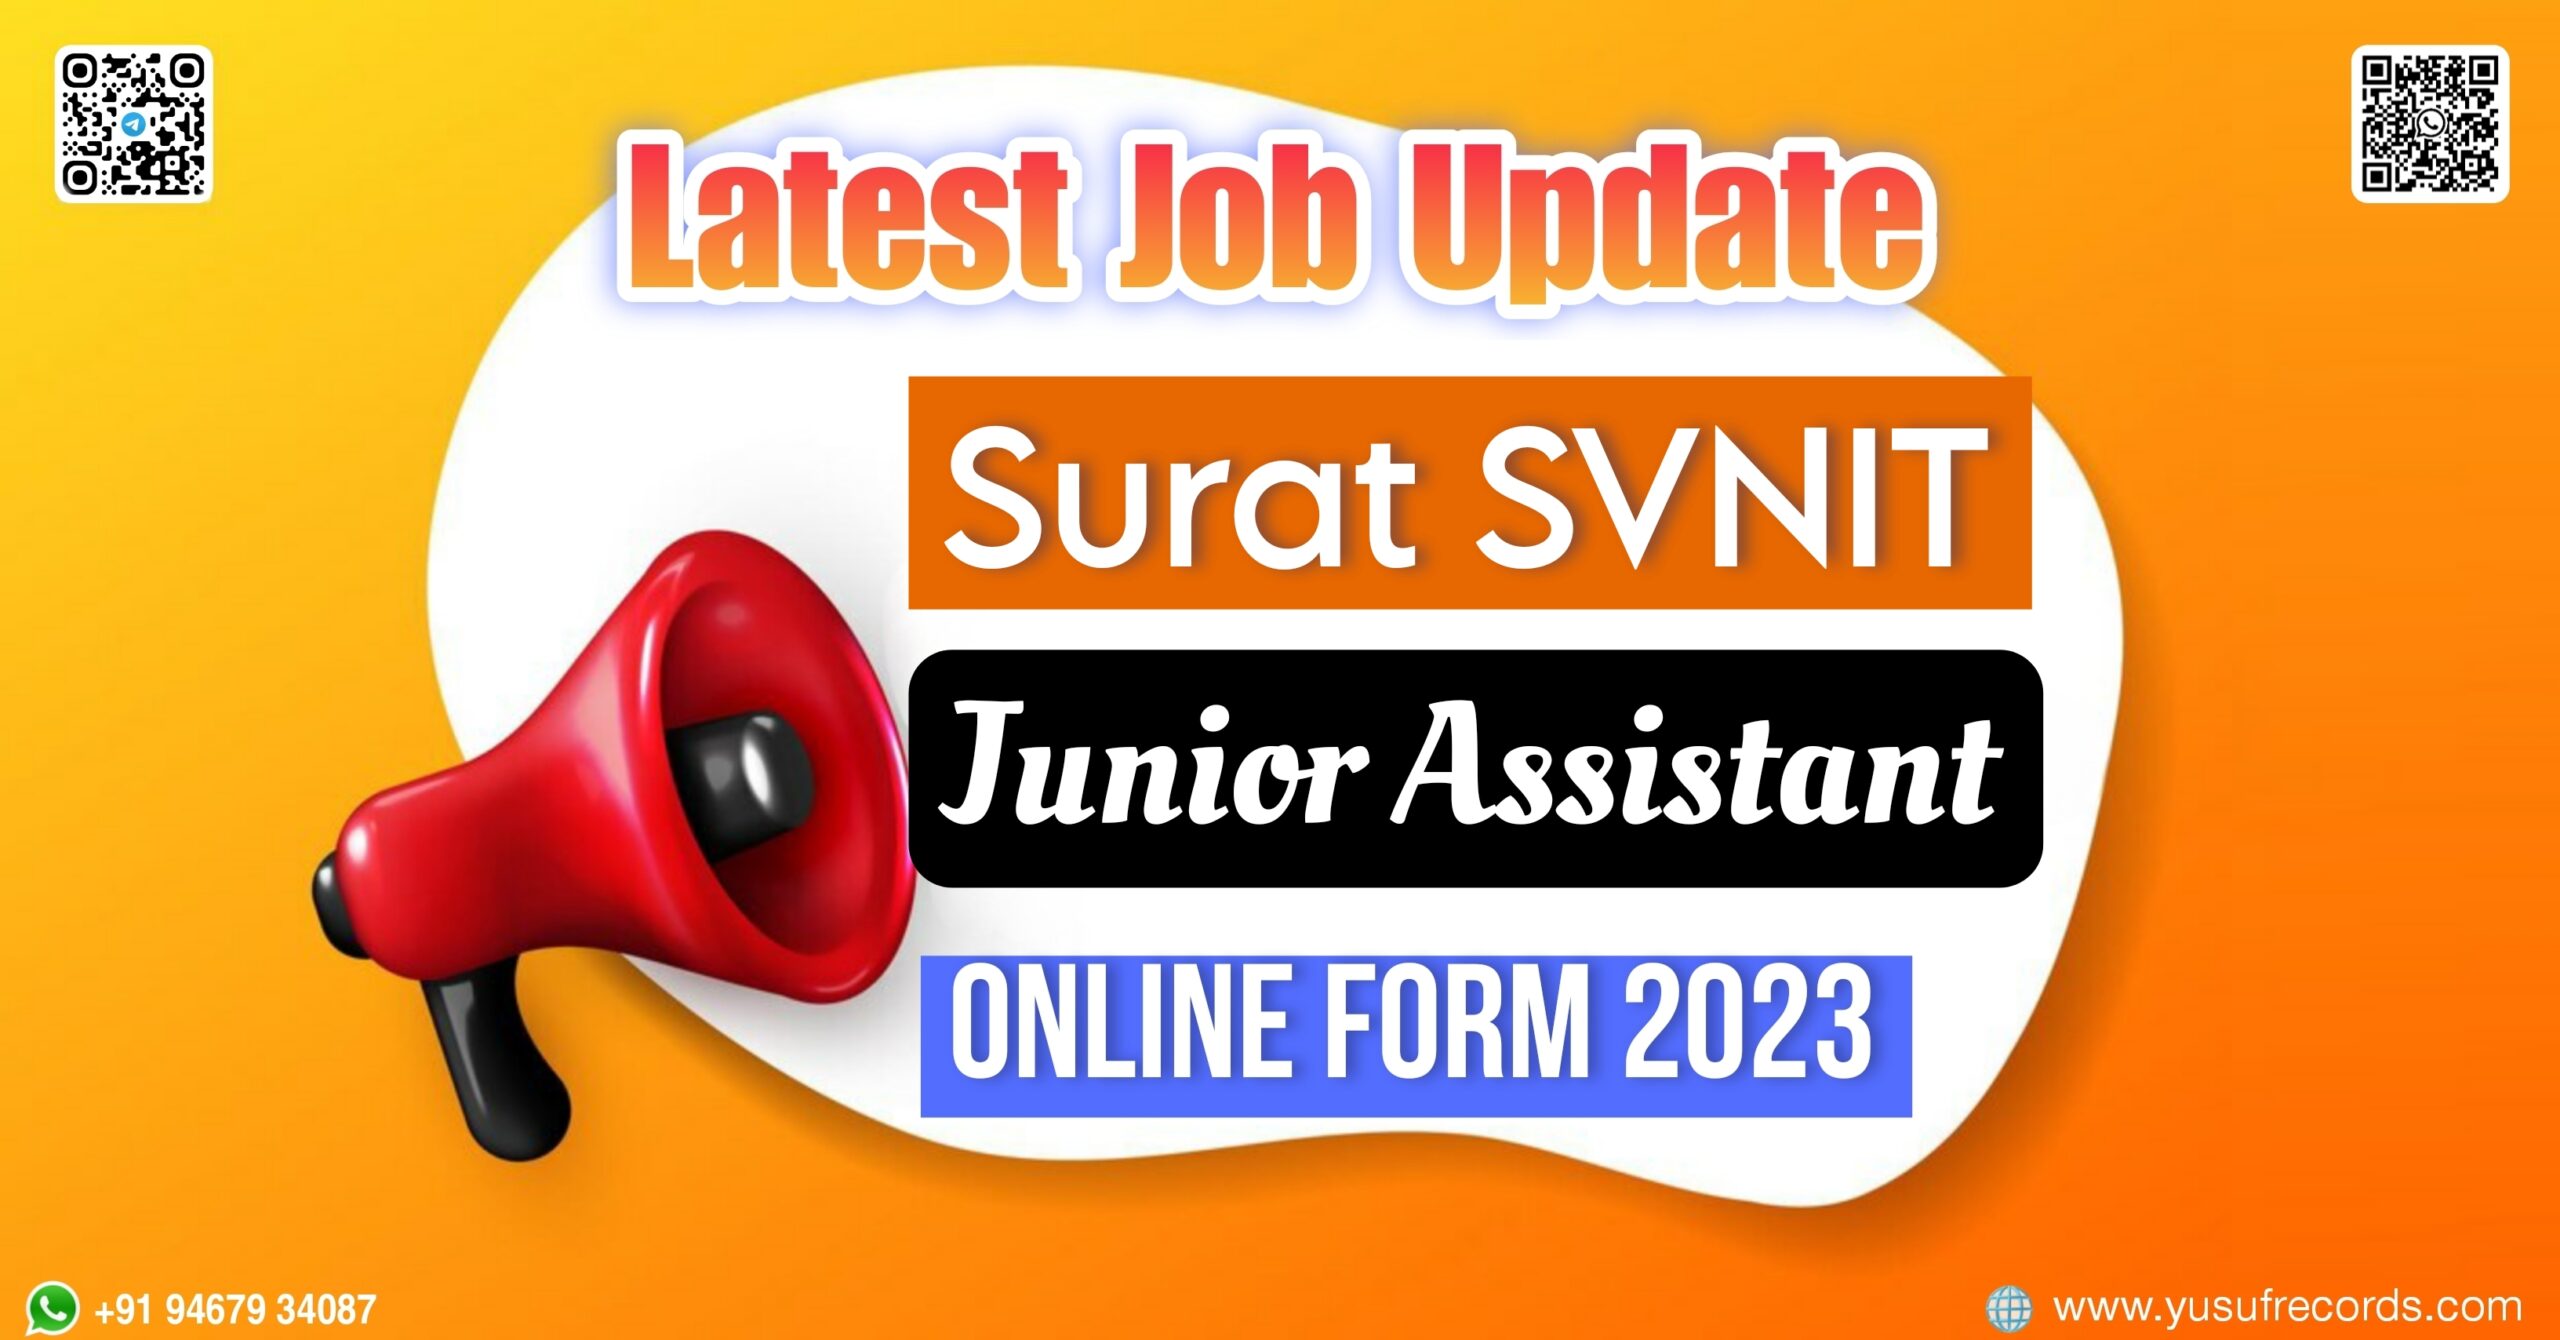 Surat SVNIT Junior Assistant Online Form yusufrecords.com